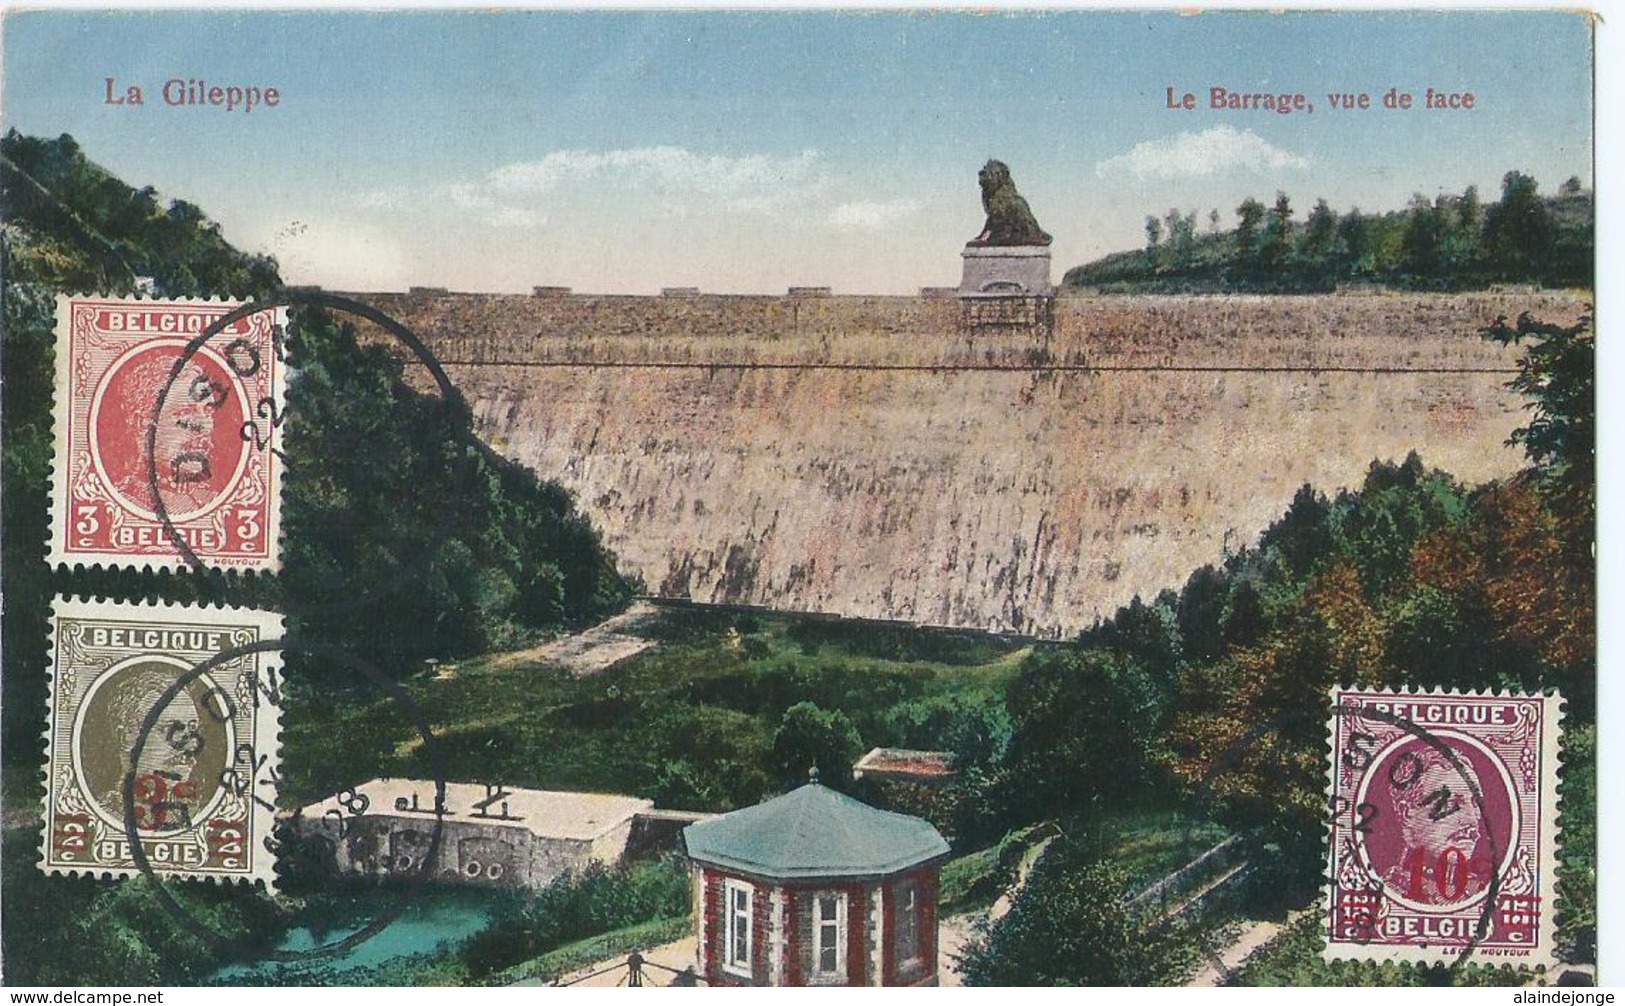 La Gileppe - Le Barrage, Vue De Face - Edition Guggenheim & Co No 16776 - 1928 - Gileppe (Stuwdam)